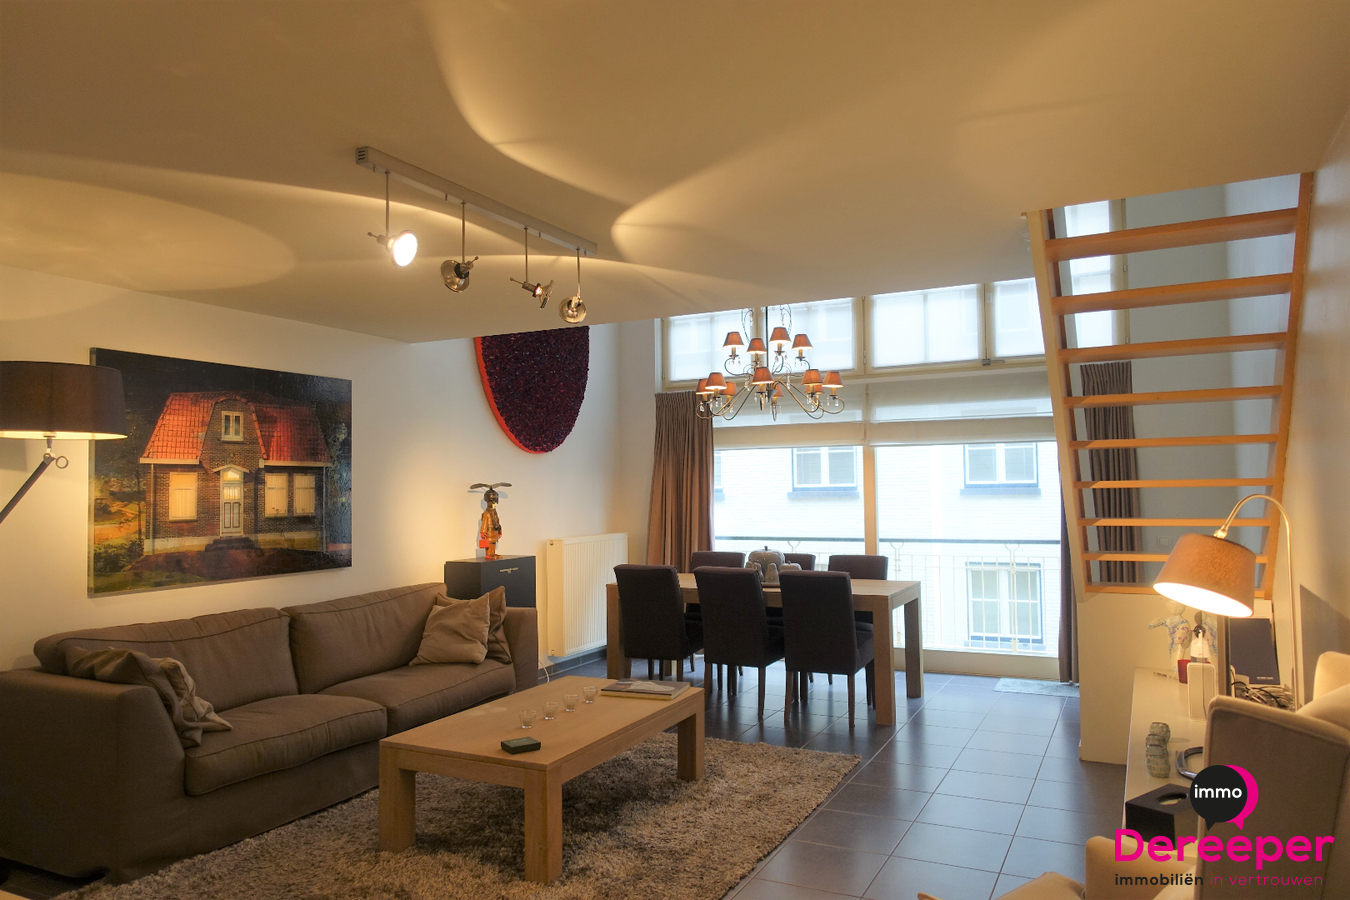 Verkocht - Appartement - Knokke-Heist